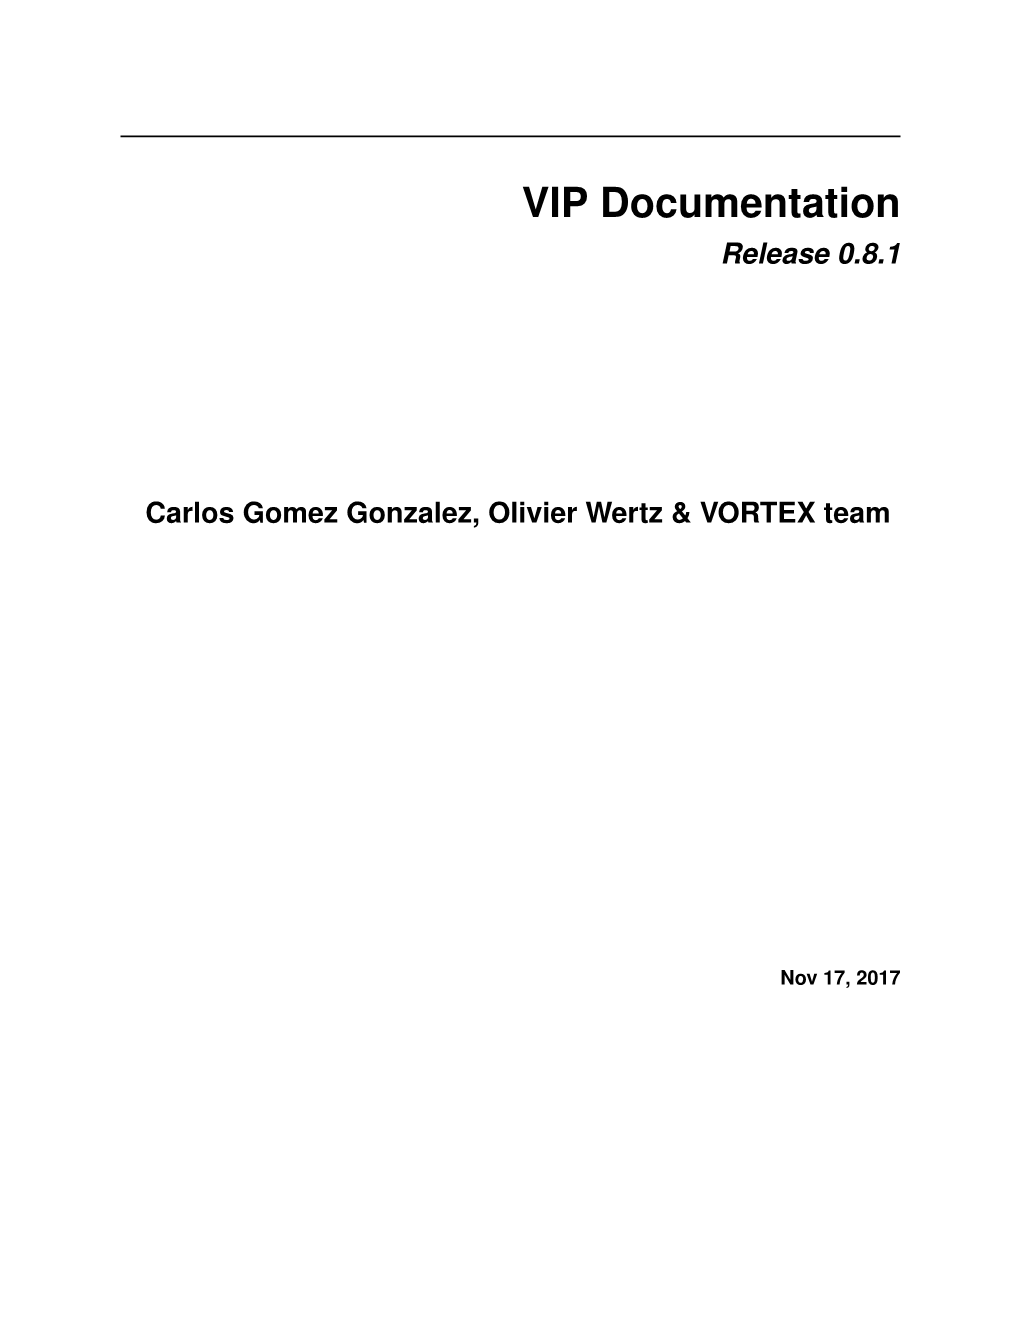 VIP Documentation Release 0.8.1